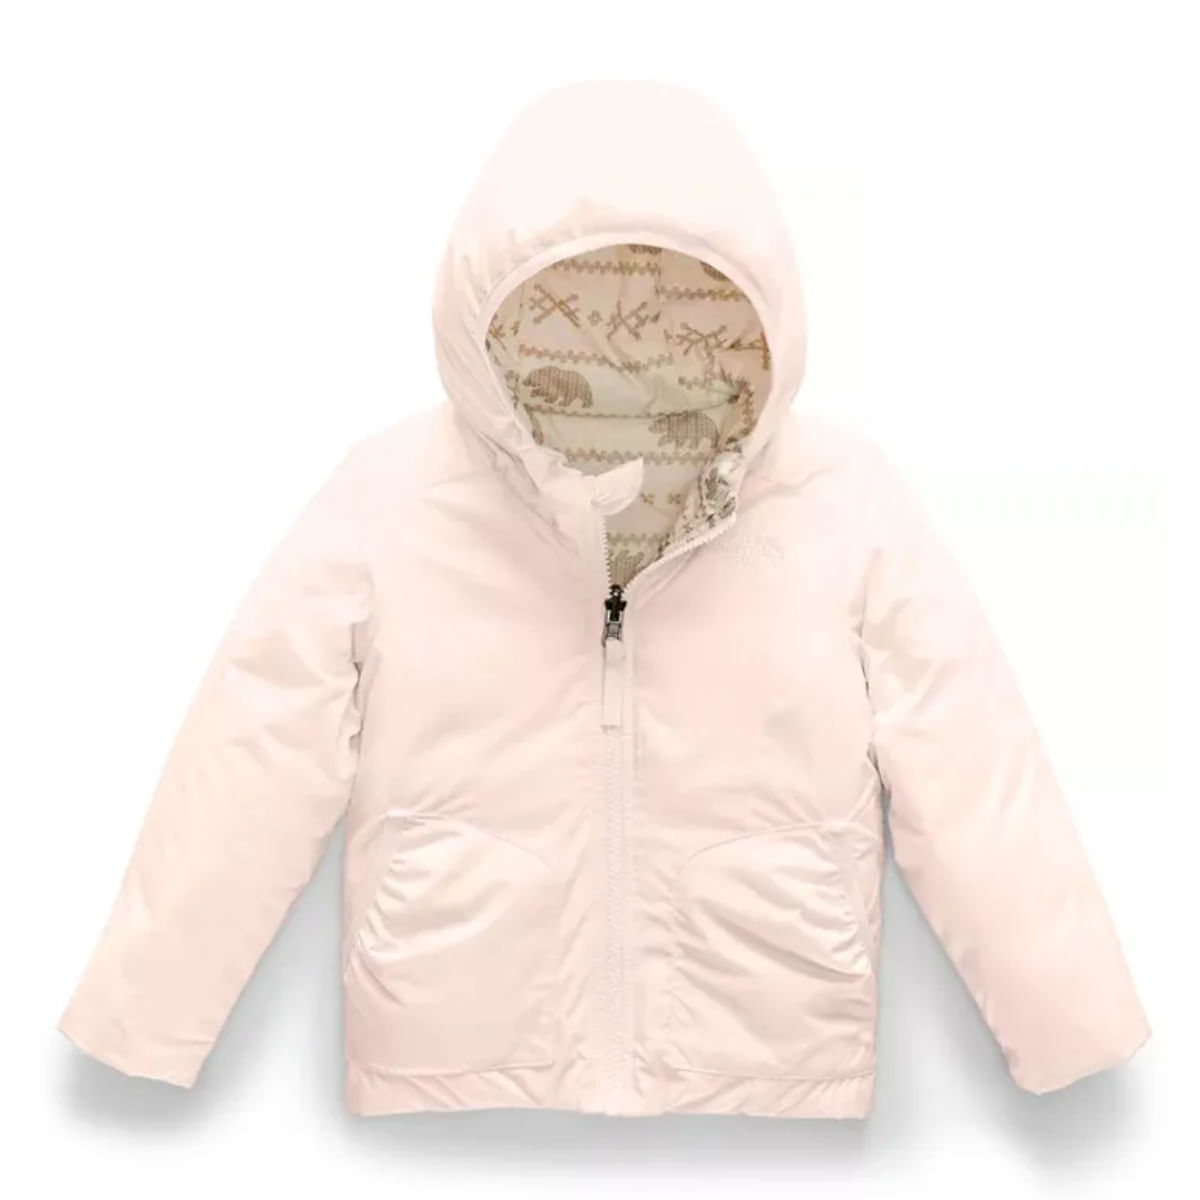 north face pink toddler jacket